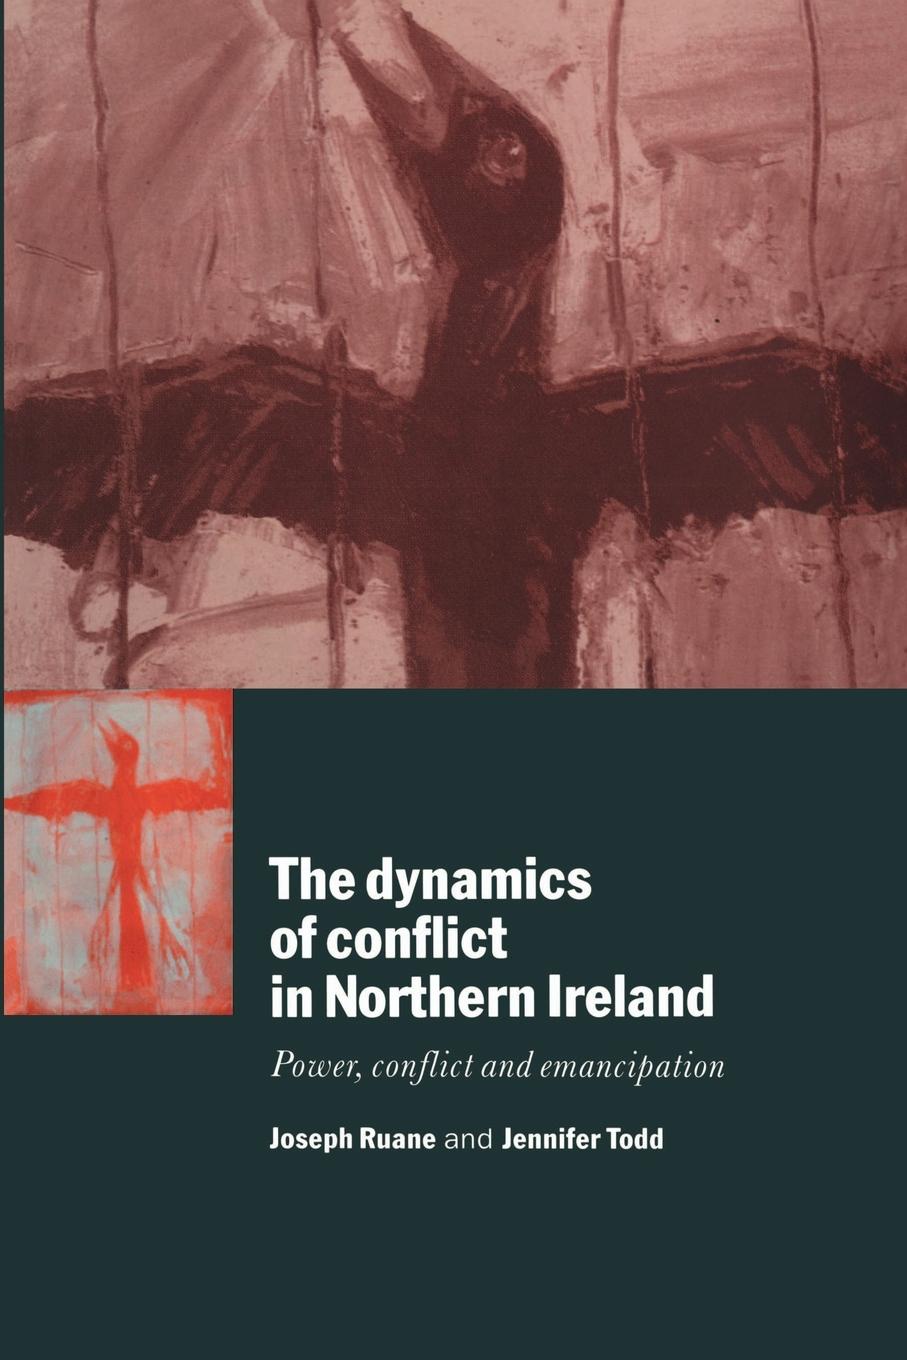 The Dynamics of Conflict in Northern Ireland - Ruane, Joseph Joseph, Ruane Jennifer, Todd